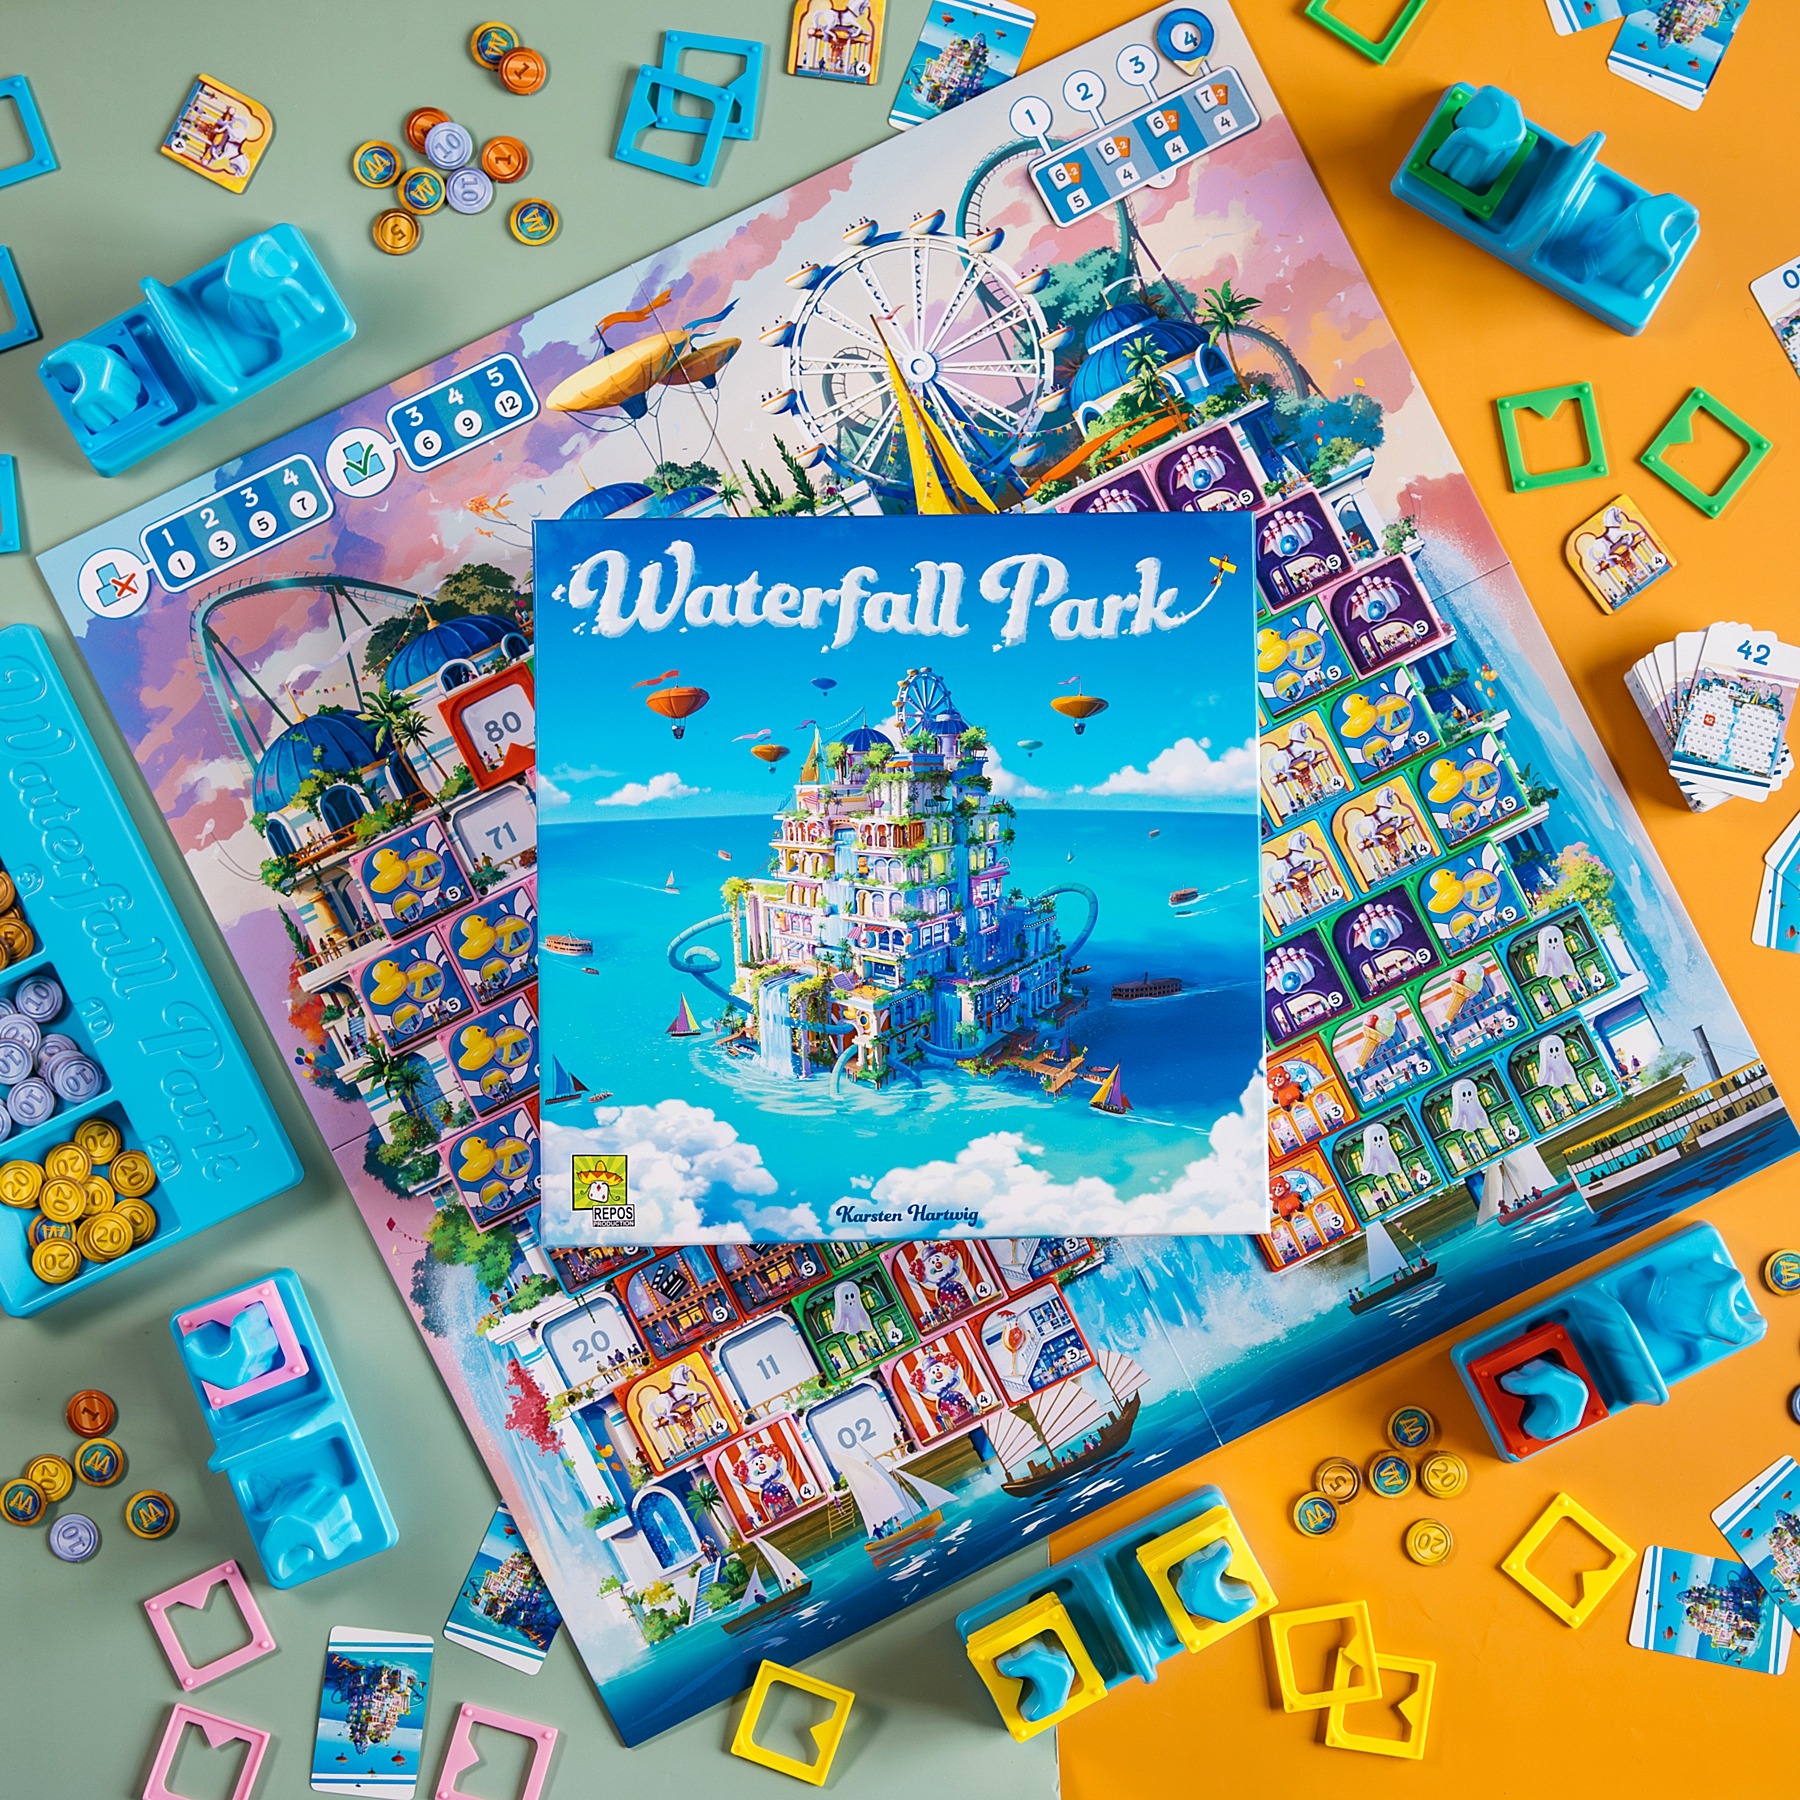 Waterfall park repos production jeu de société 